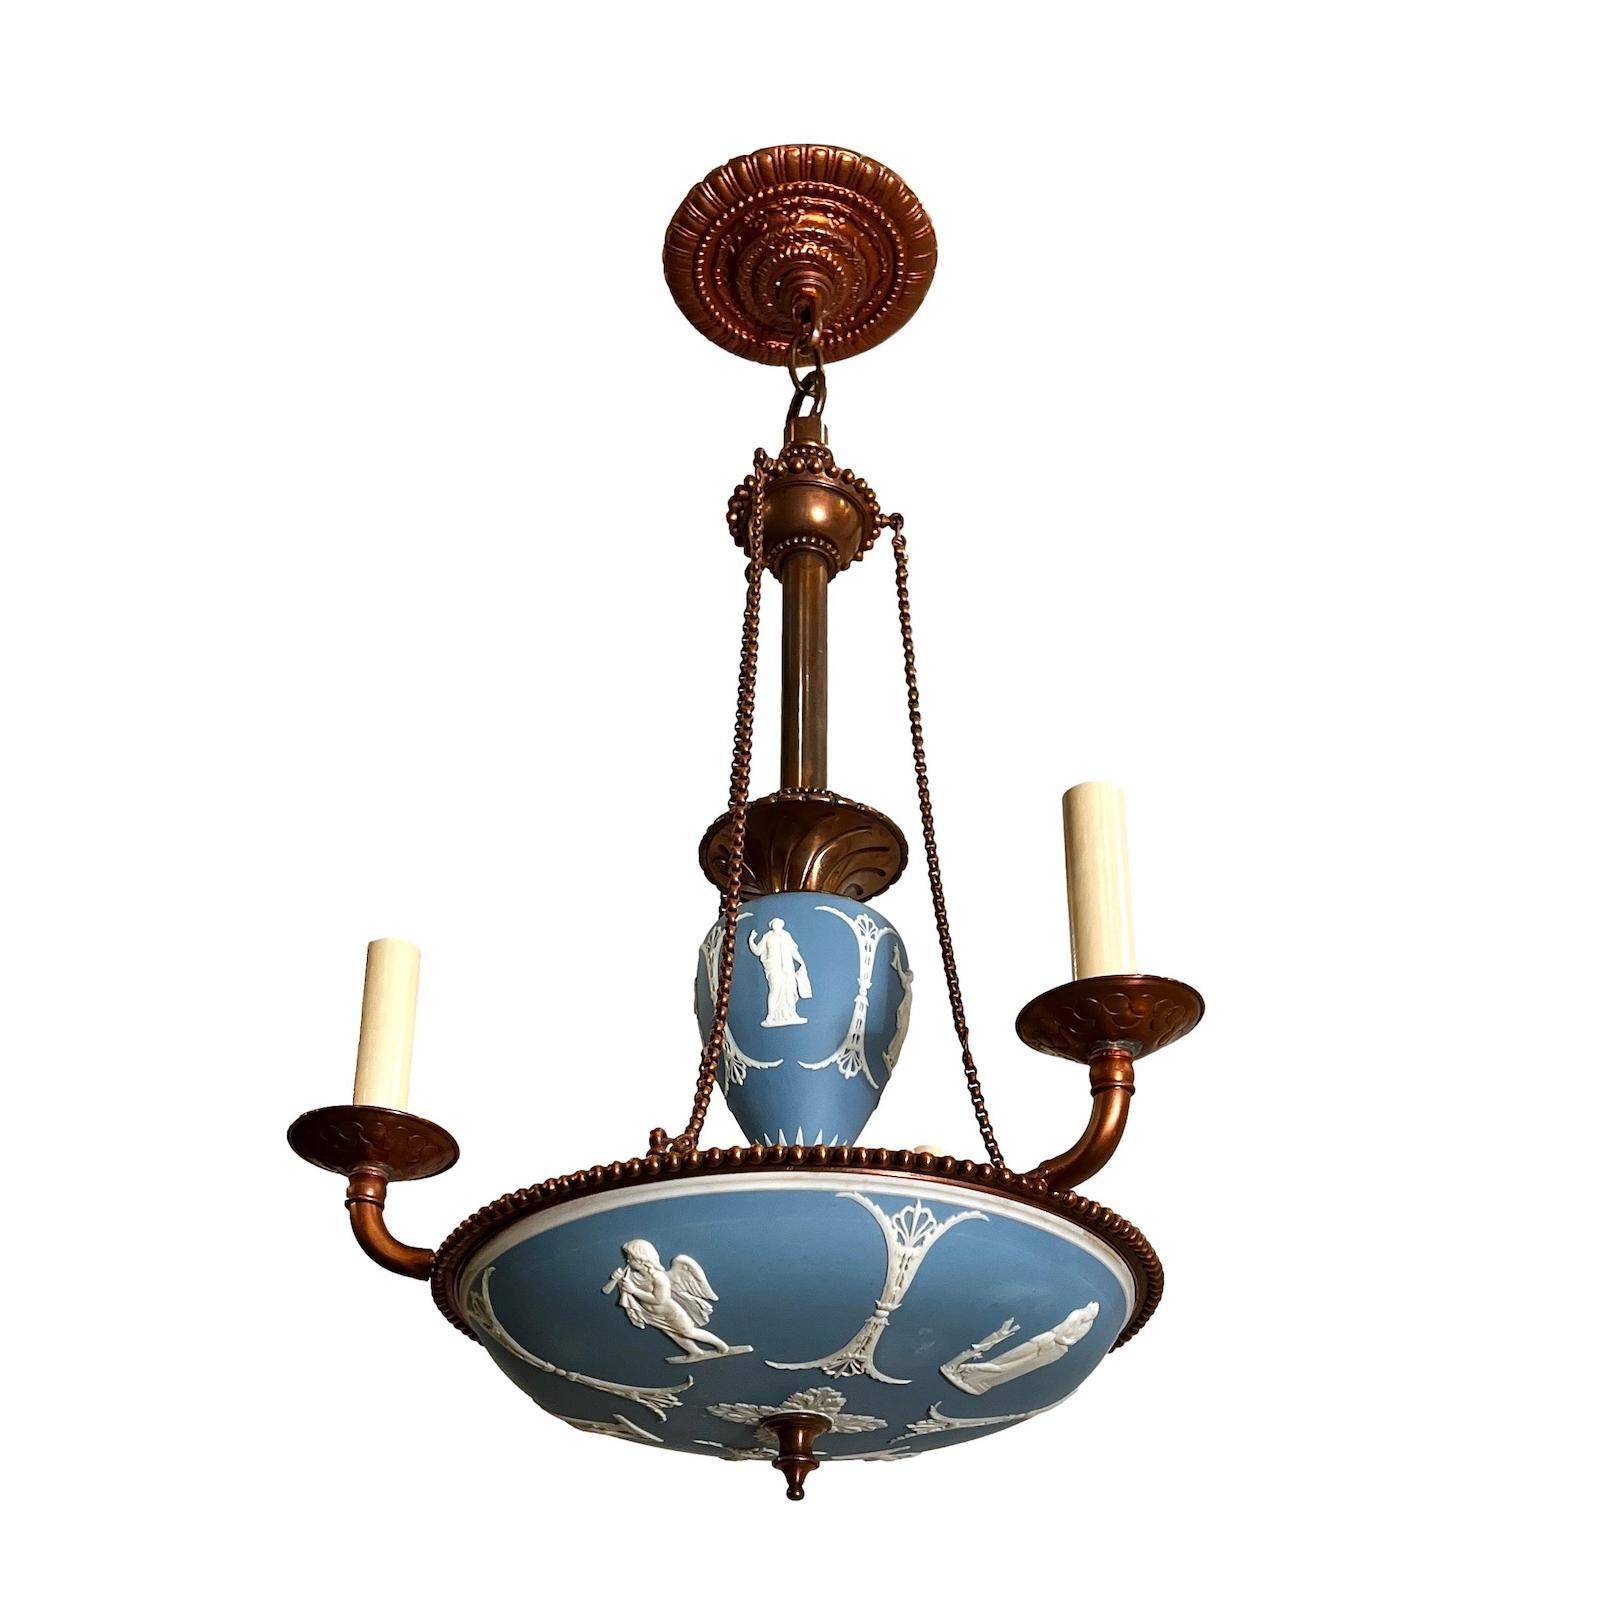 A circa 1900 English copper chandelier with Wedgwood porcelain plaques.

Measurements:
Drop: 26